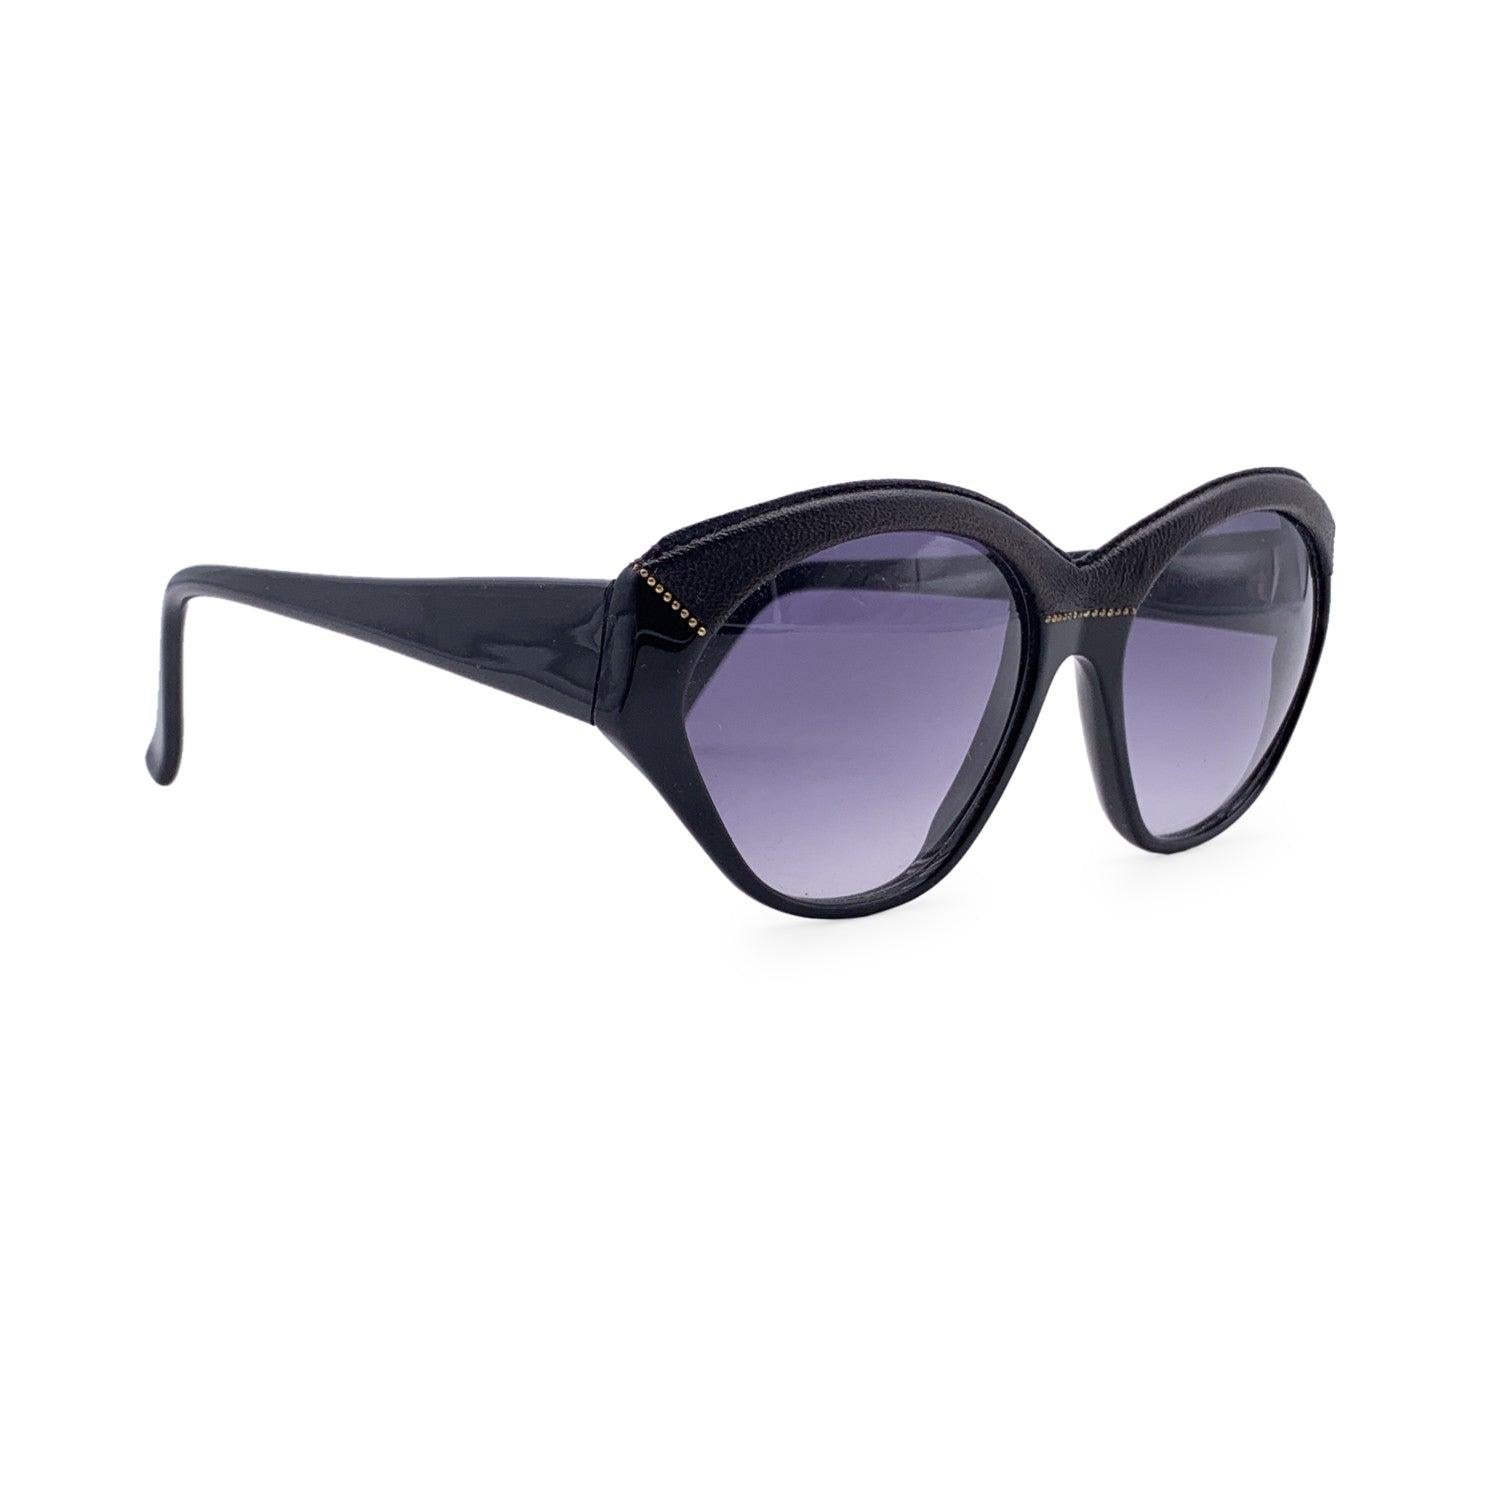 Gray Yves Saint Laurent Vintage Sunglasses 8916 P367 58-12 135mm